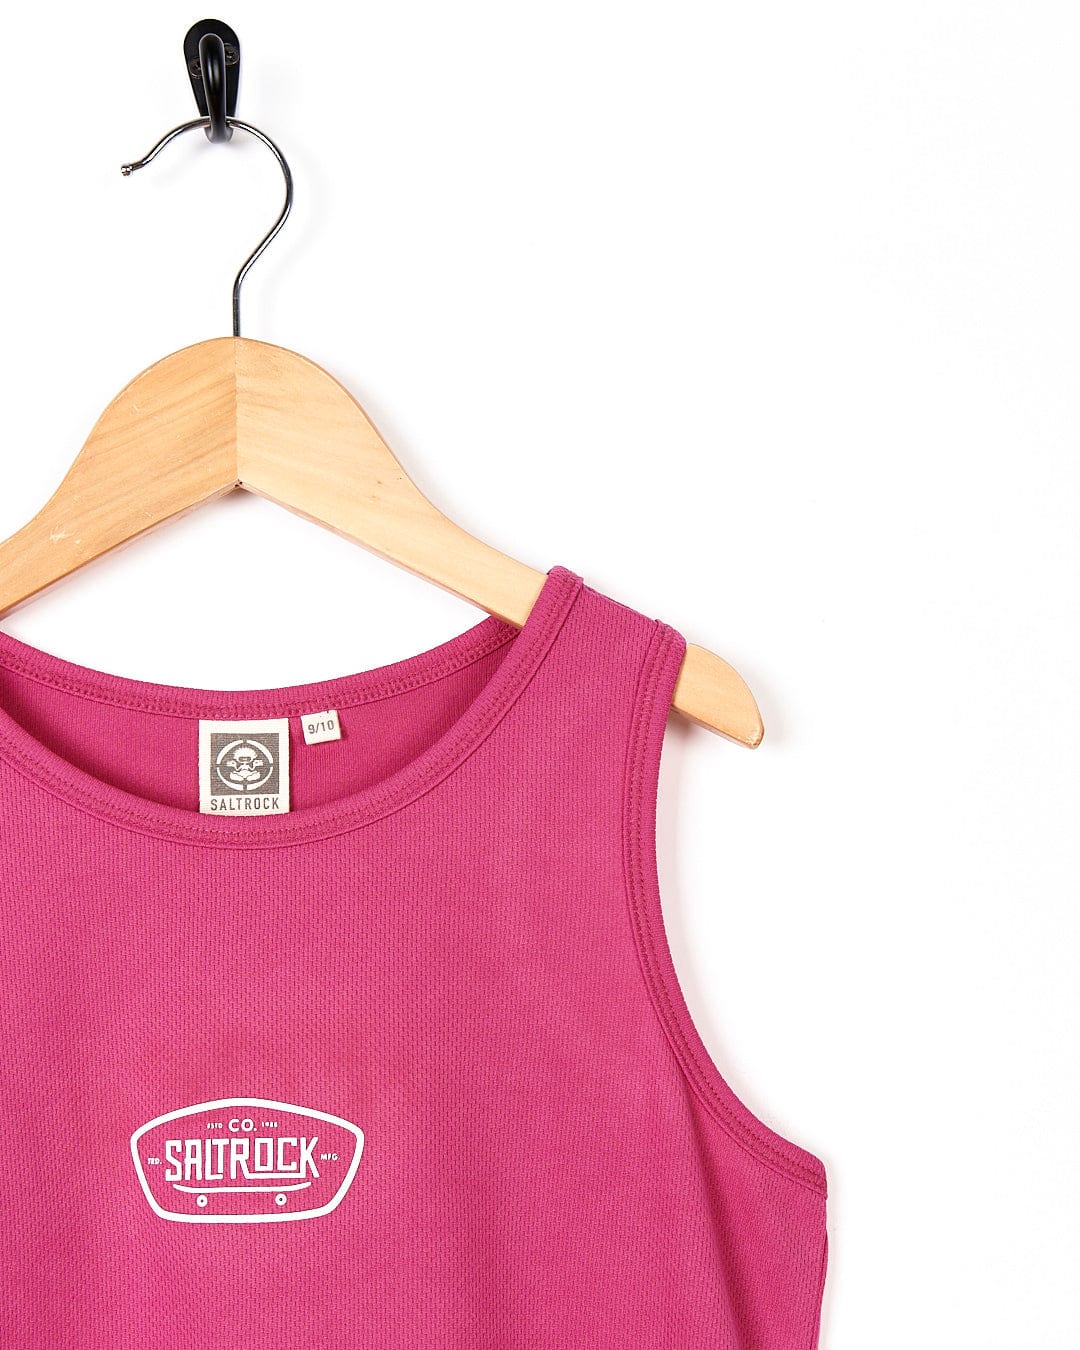 A Dark Pink Hardskate - Kids Vest with a Saltrock logo on it.